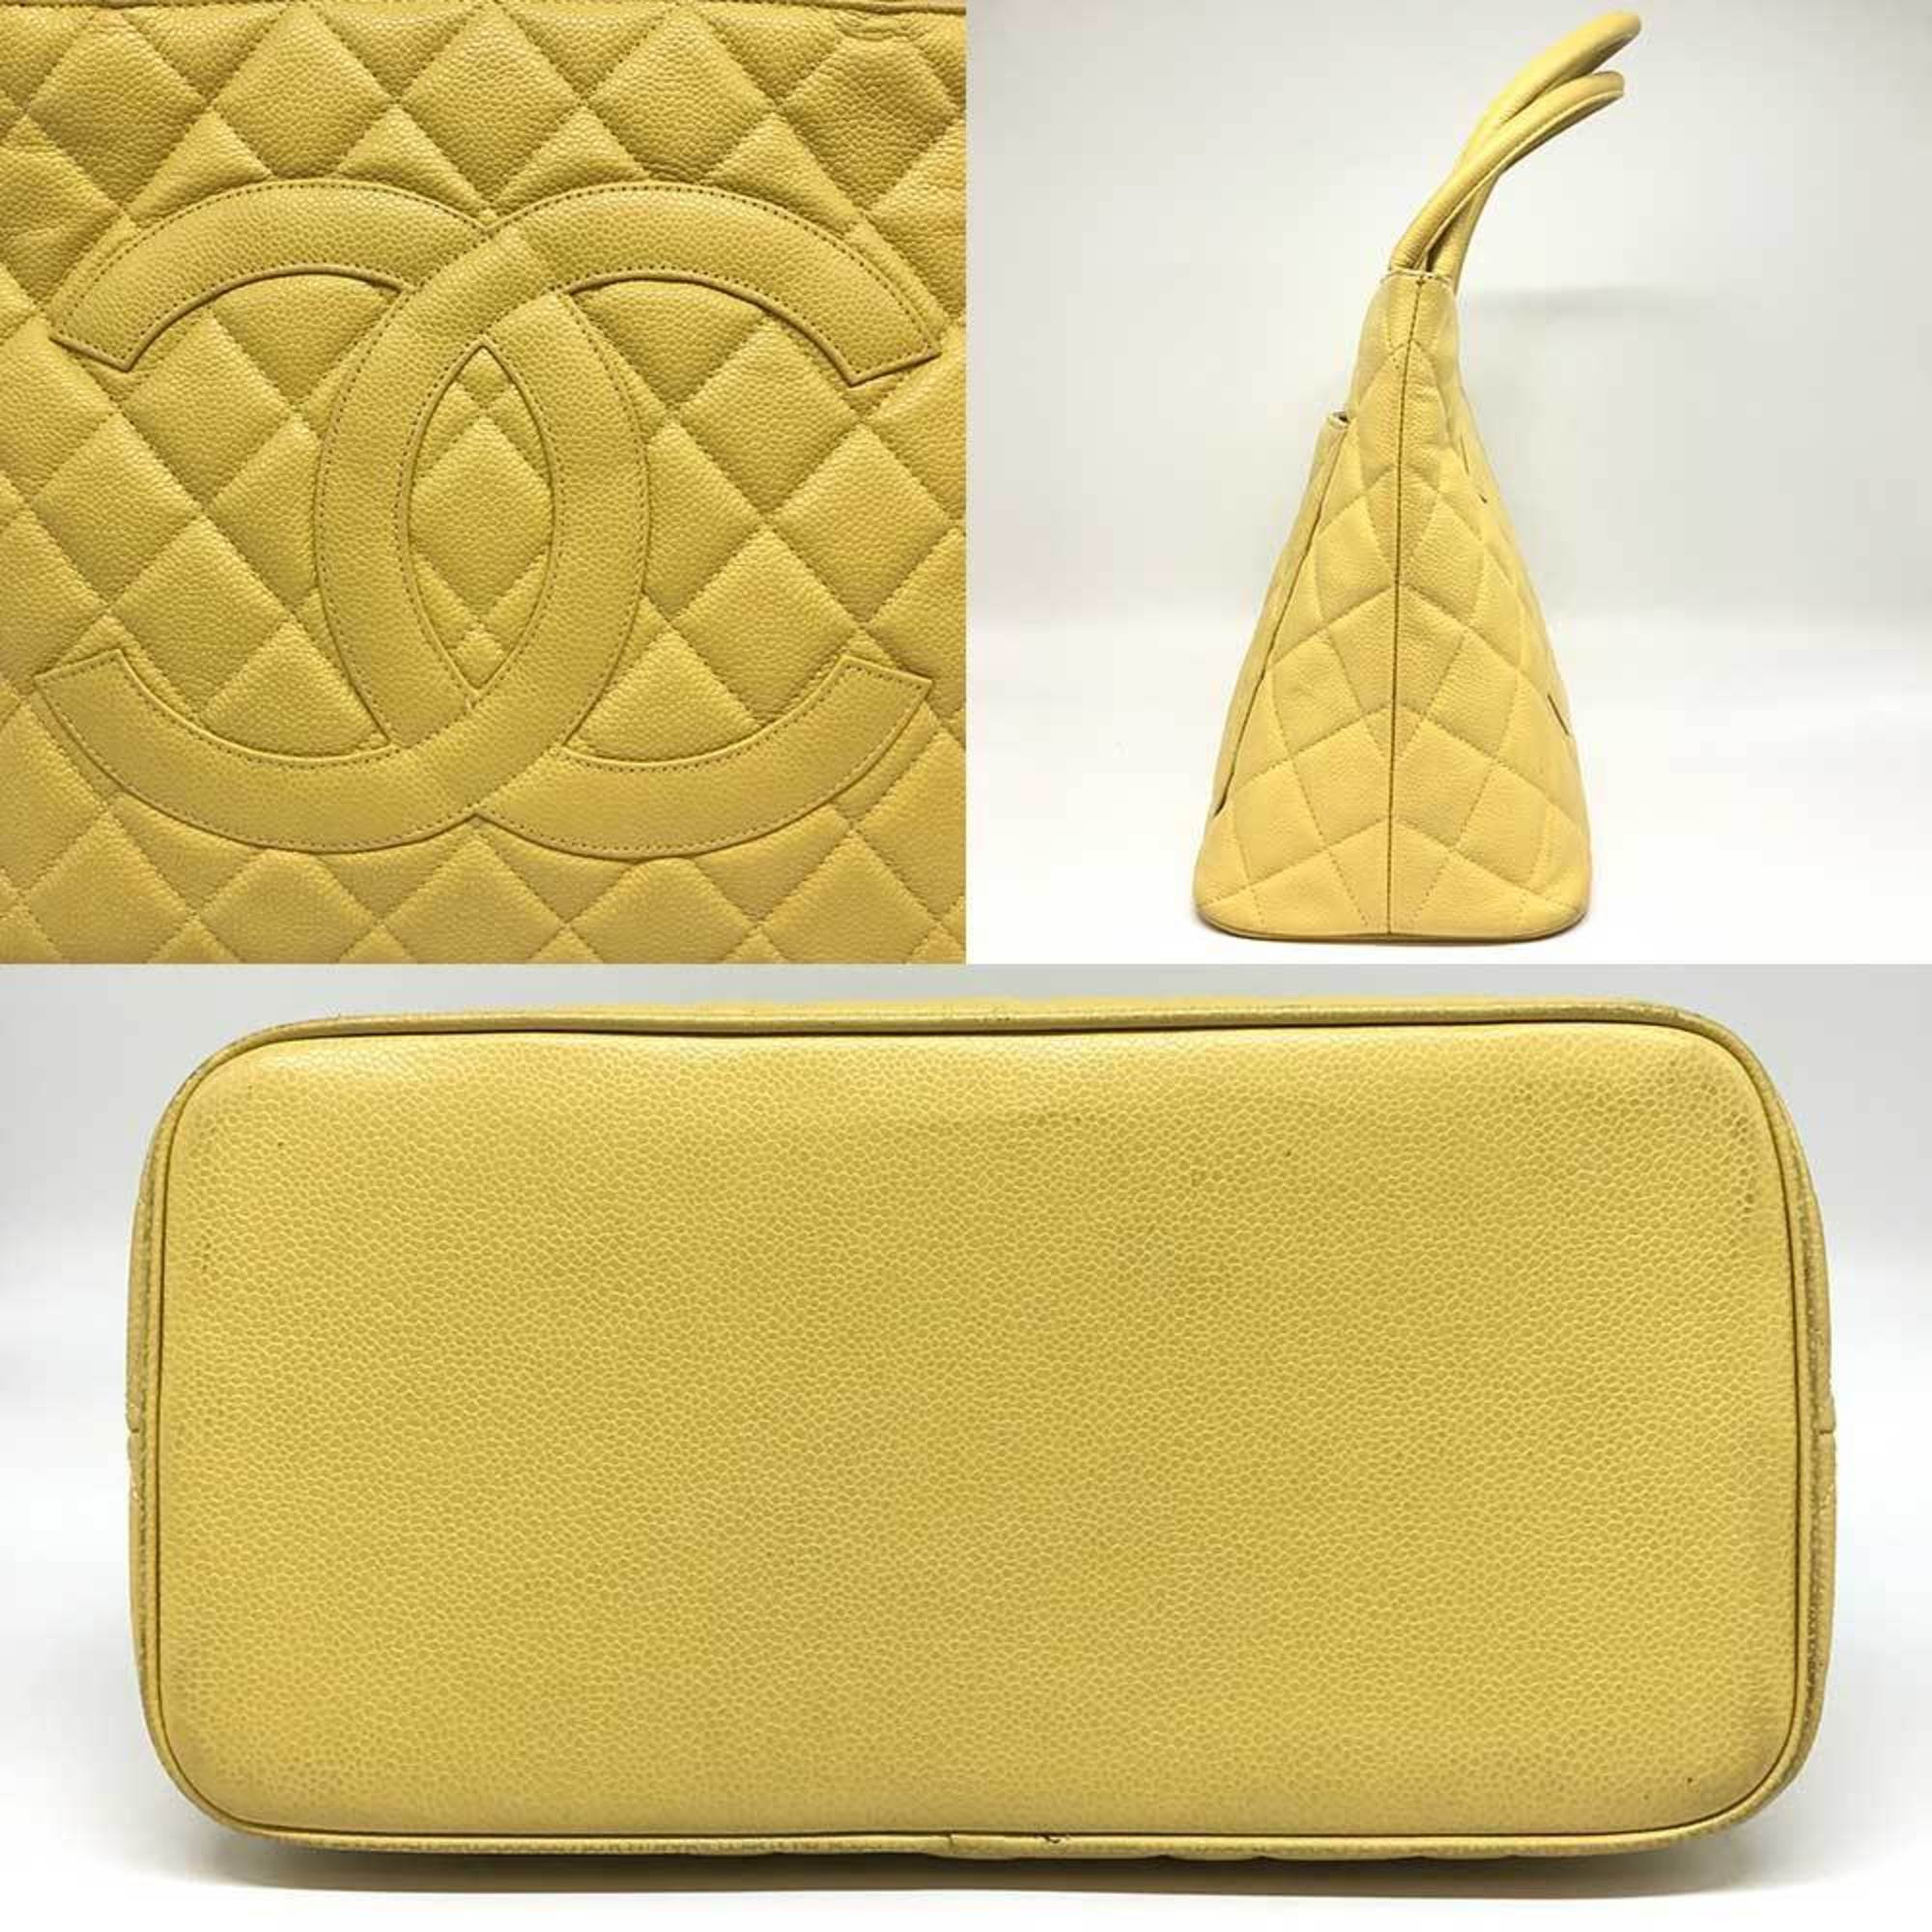 Chanel Reproduction Tote Yellow Handbag CHANEL Coco Mark Caviar Skin